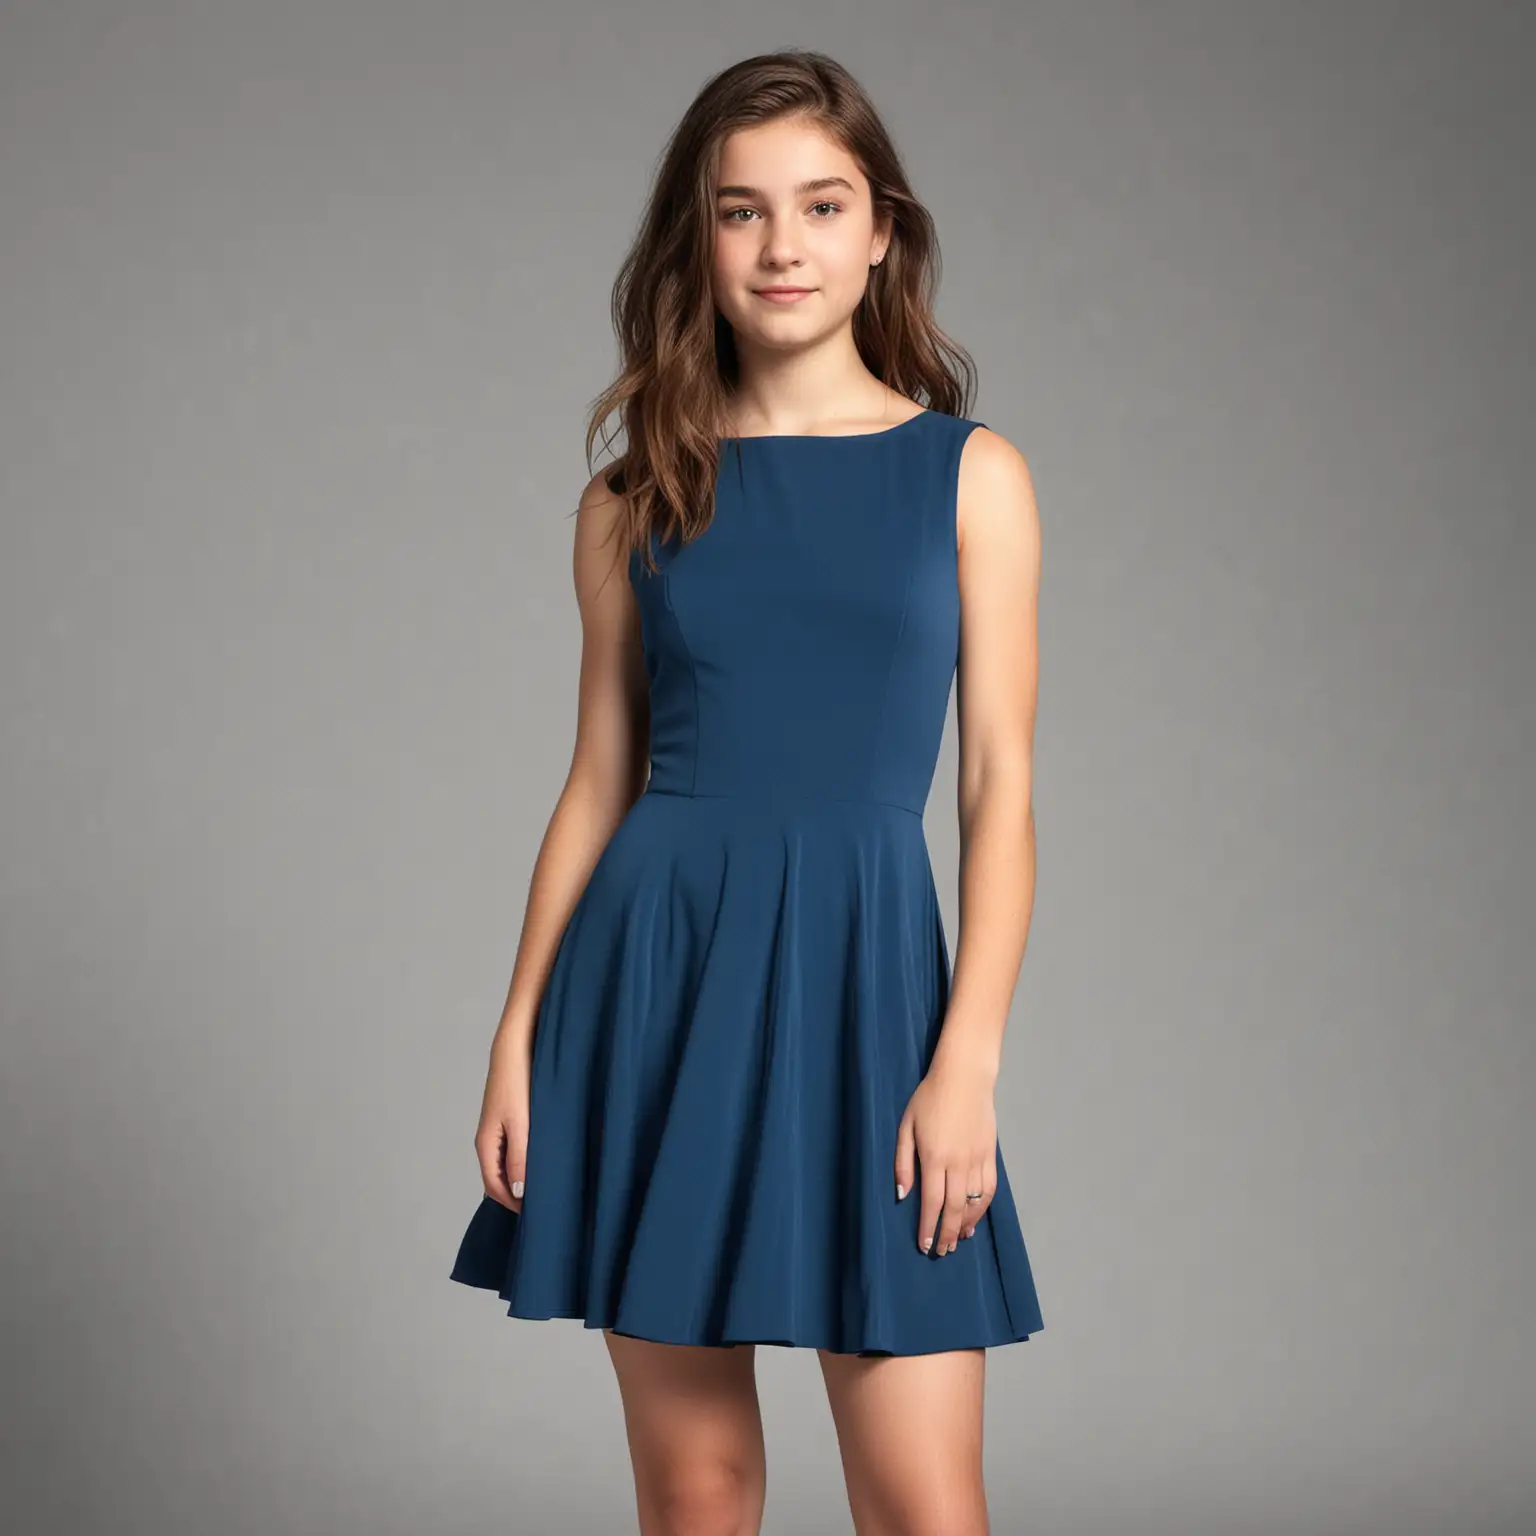 Teenage-Girl-in-Short-Blue-Dress